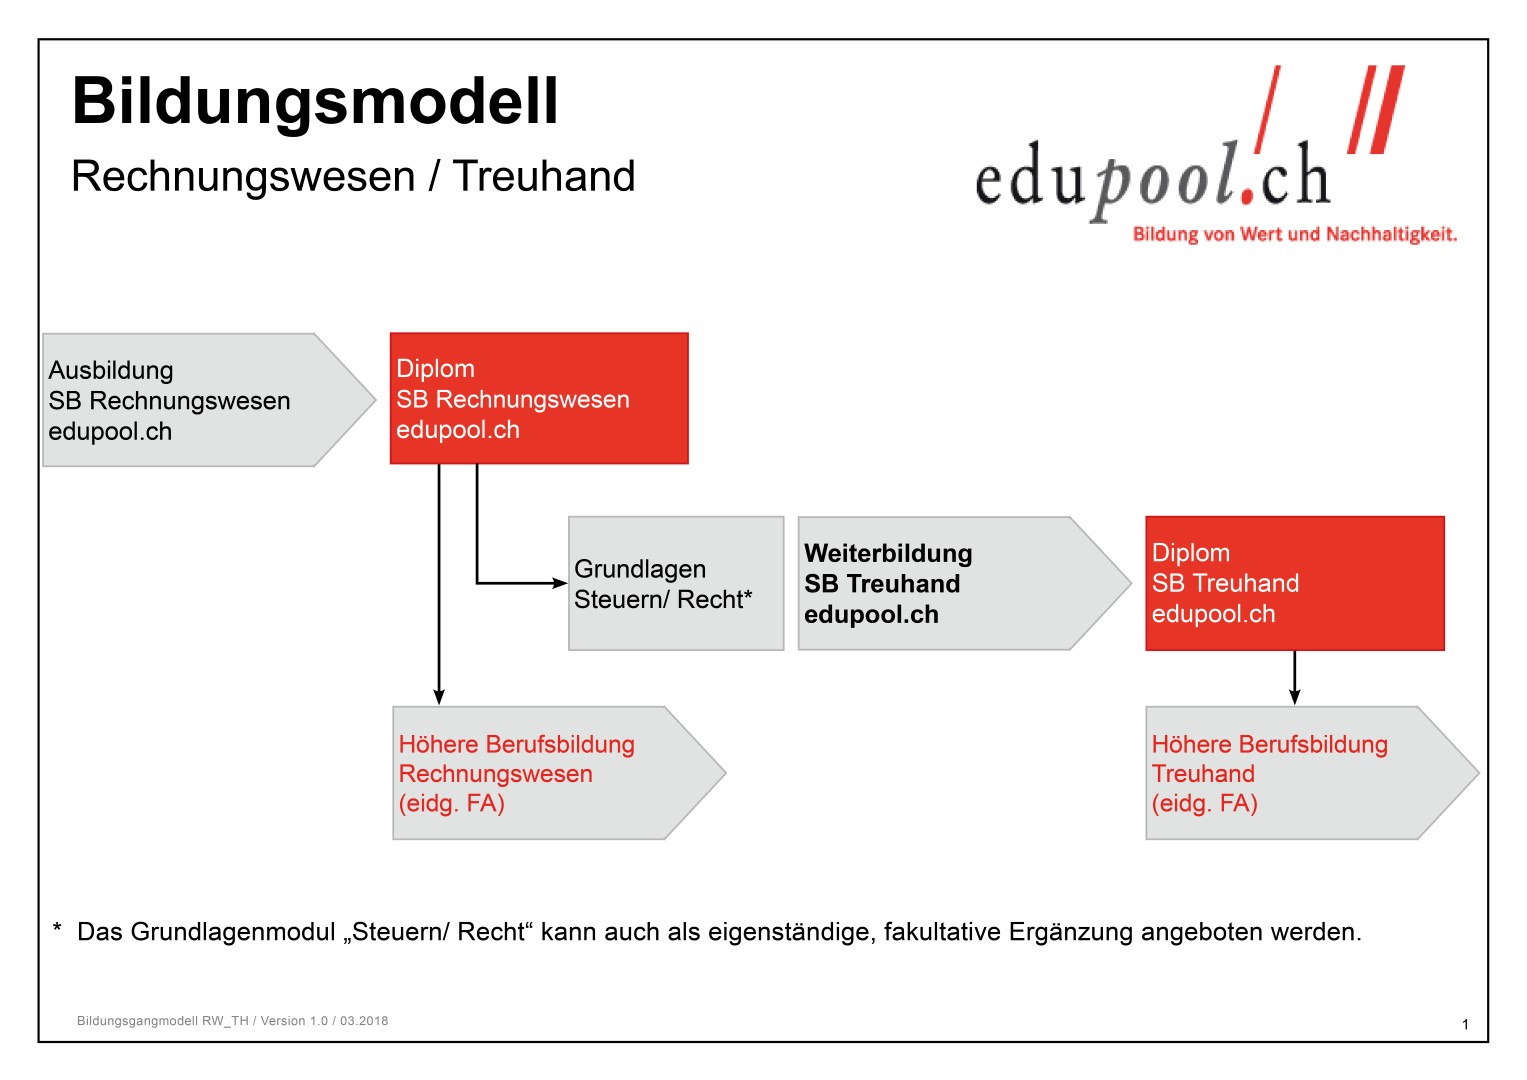 Bildungsmodell